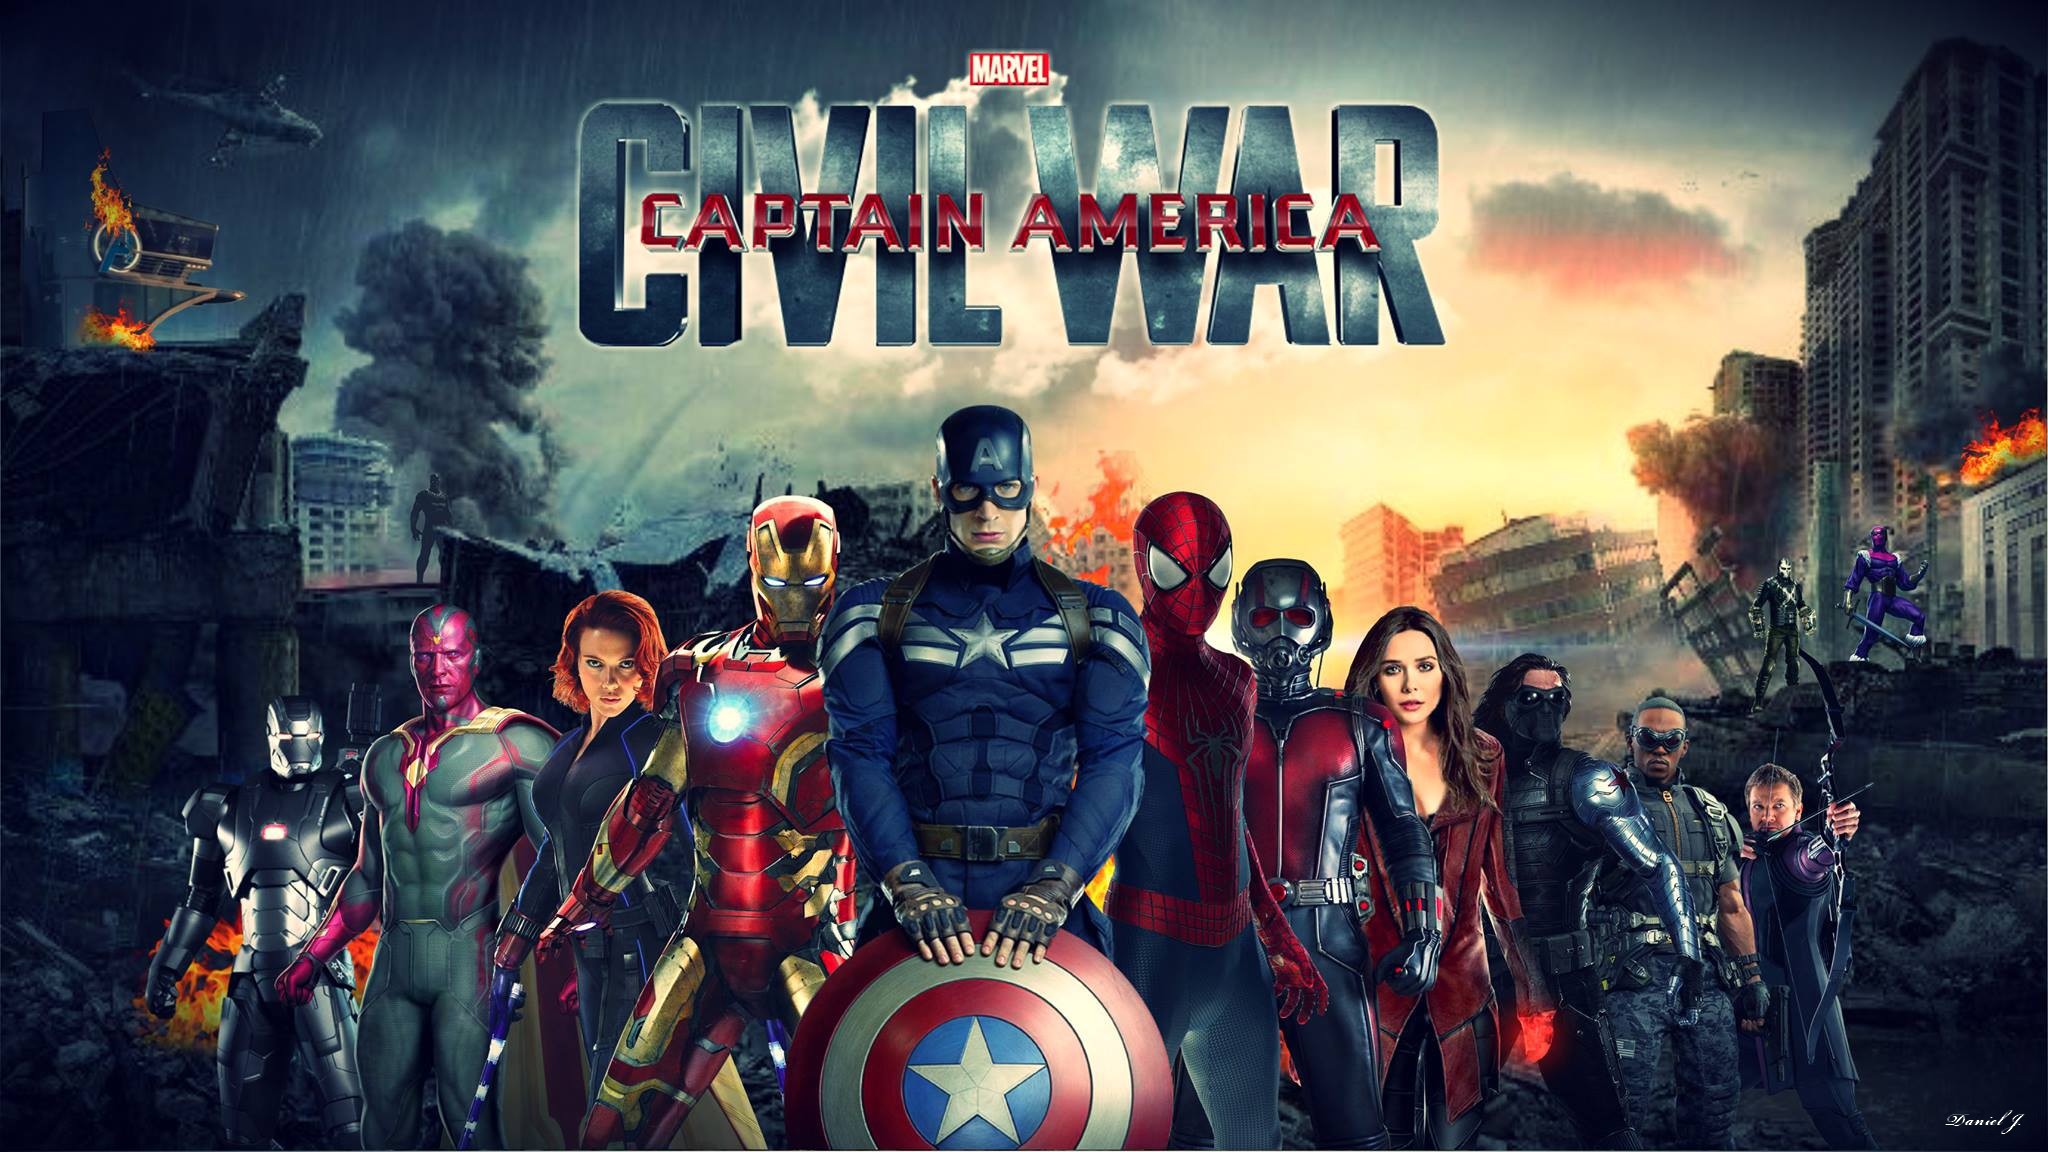 Super Herois Captain America Civil War Hd Wallpaper 2560x1440   Wallpapers13com